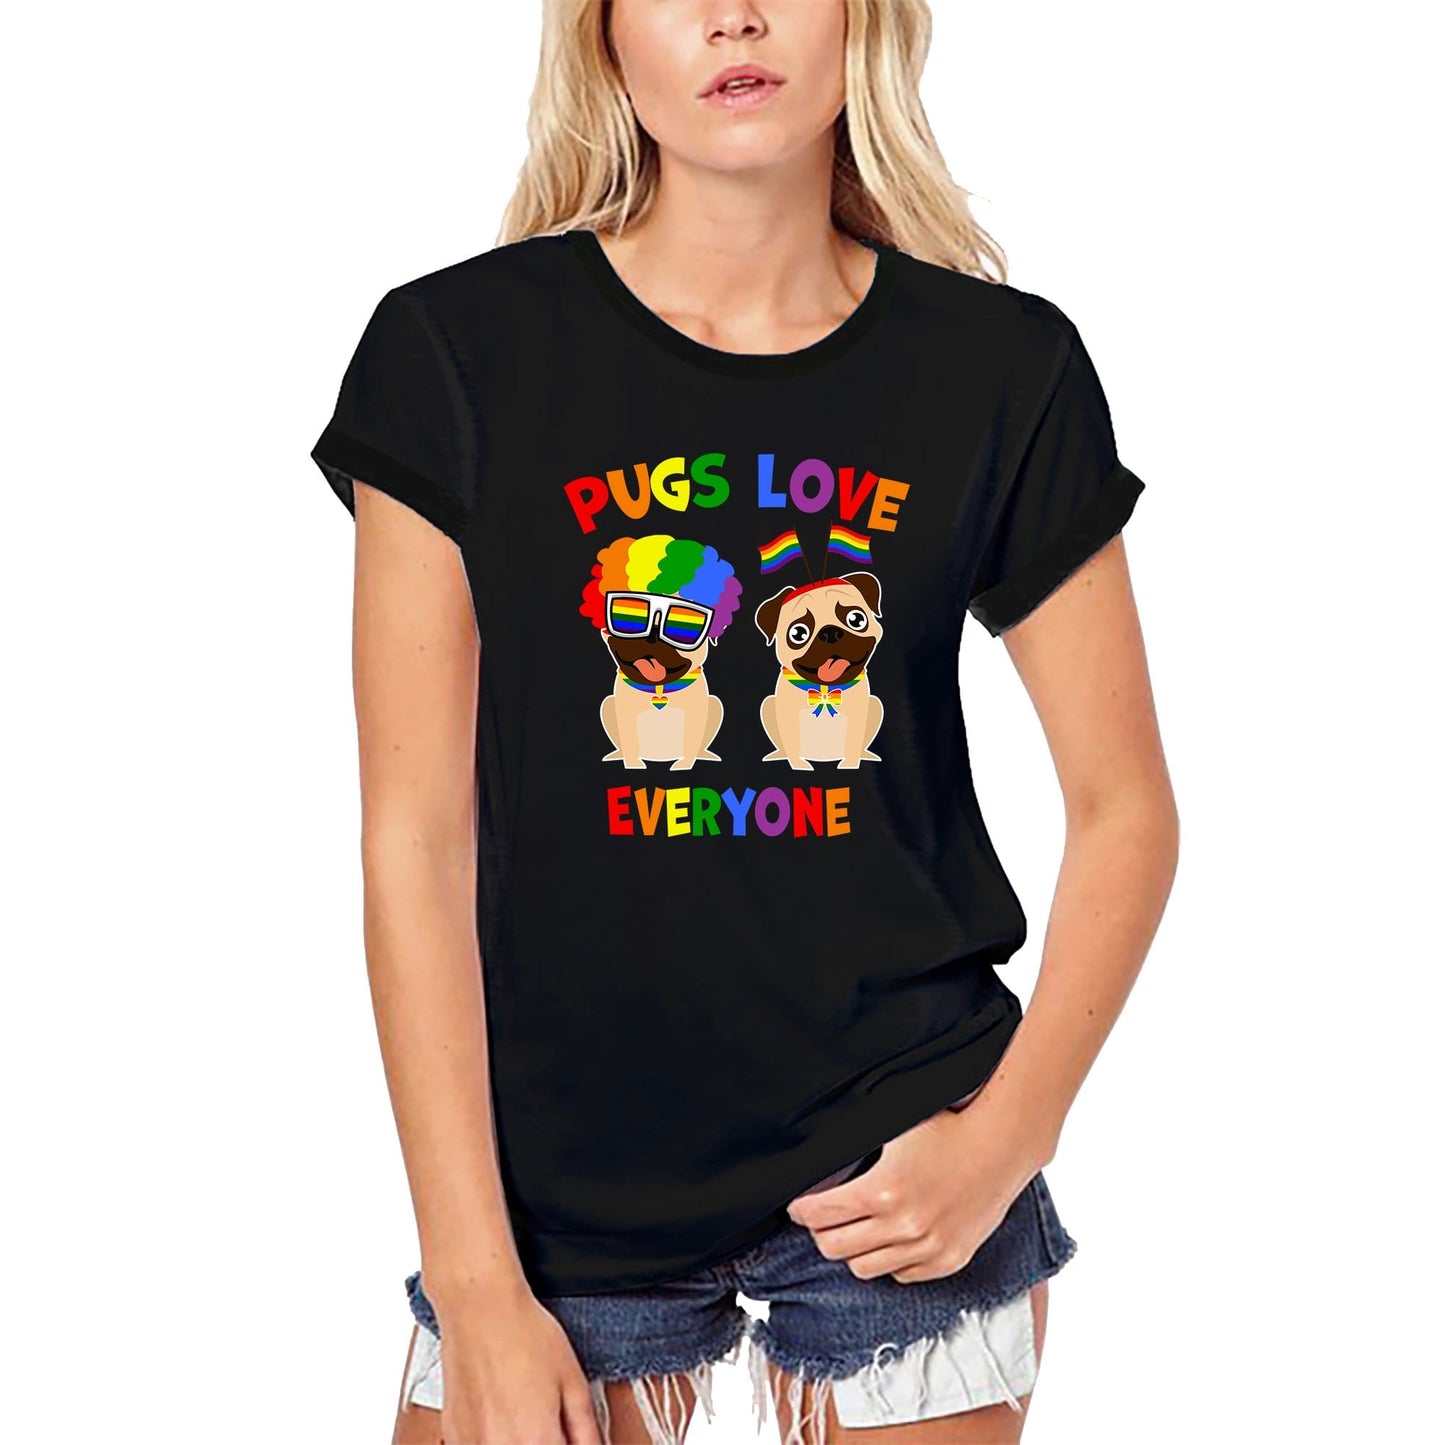 ULTRABASIC Women's Organic T-Shirt Pugs Love Everyone - Funny Dog LGBT Tee Shirt